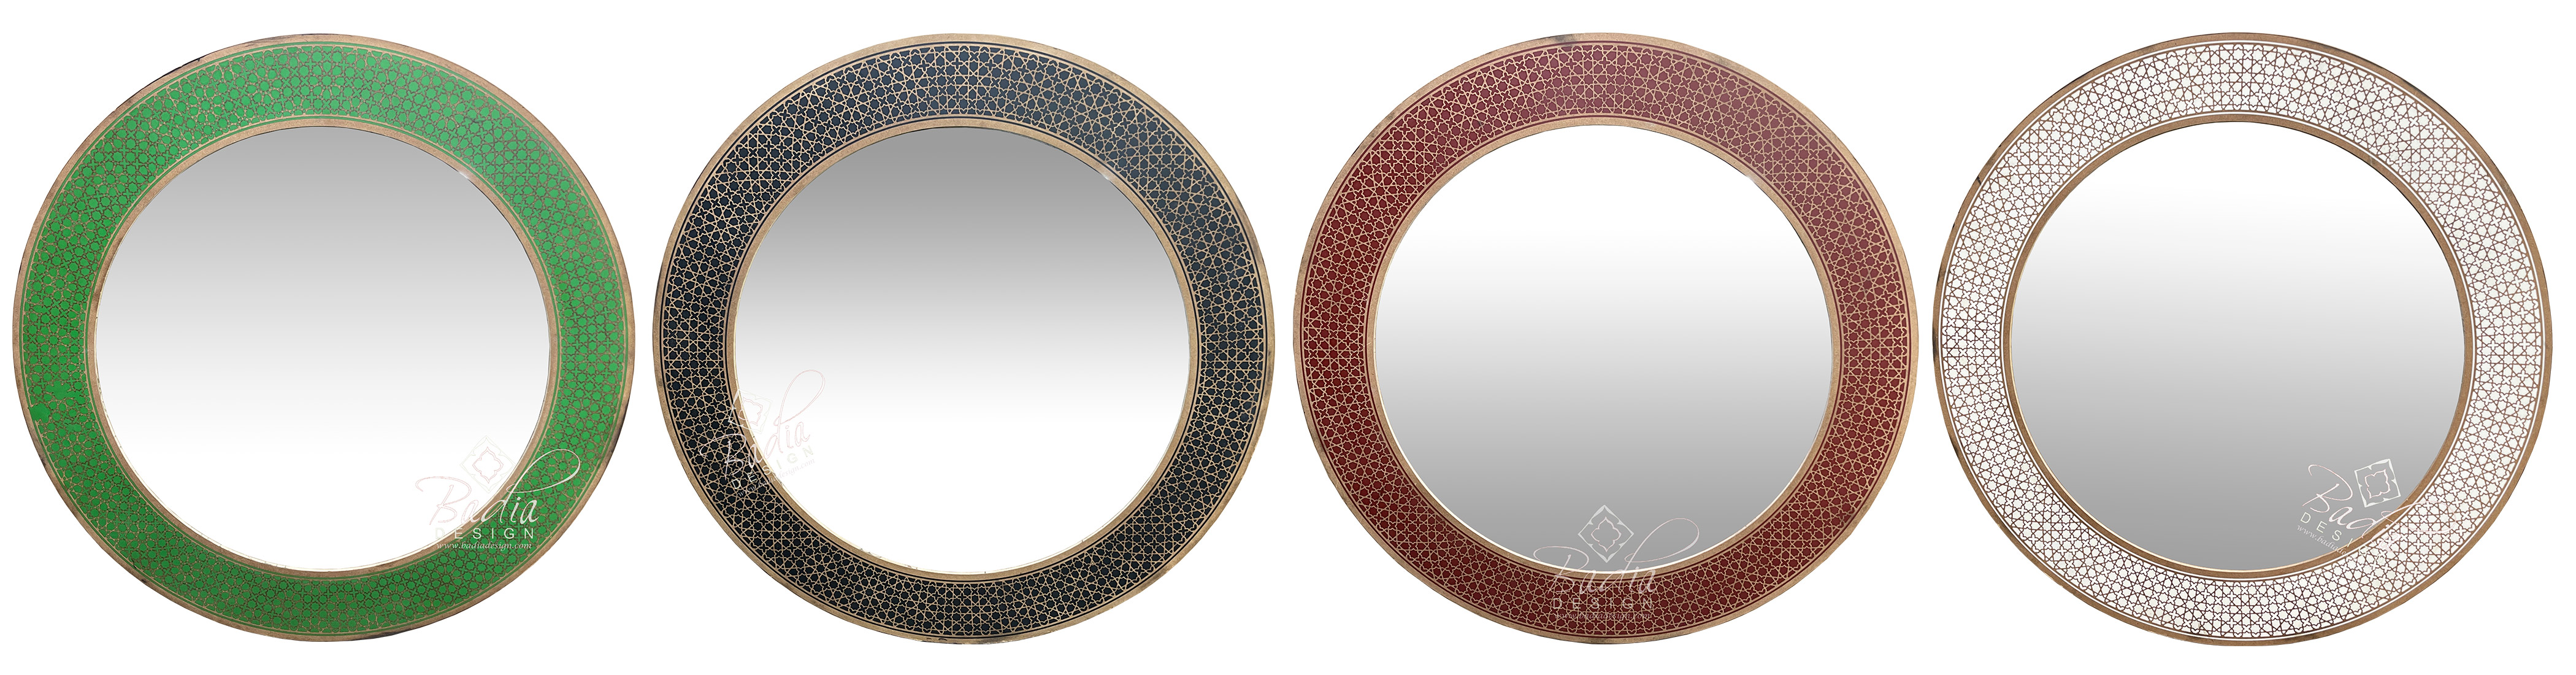 moroccan-round-hand-painted-mirrors-m-w015.jpg